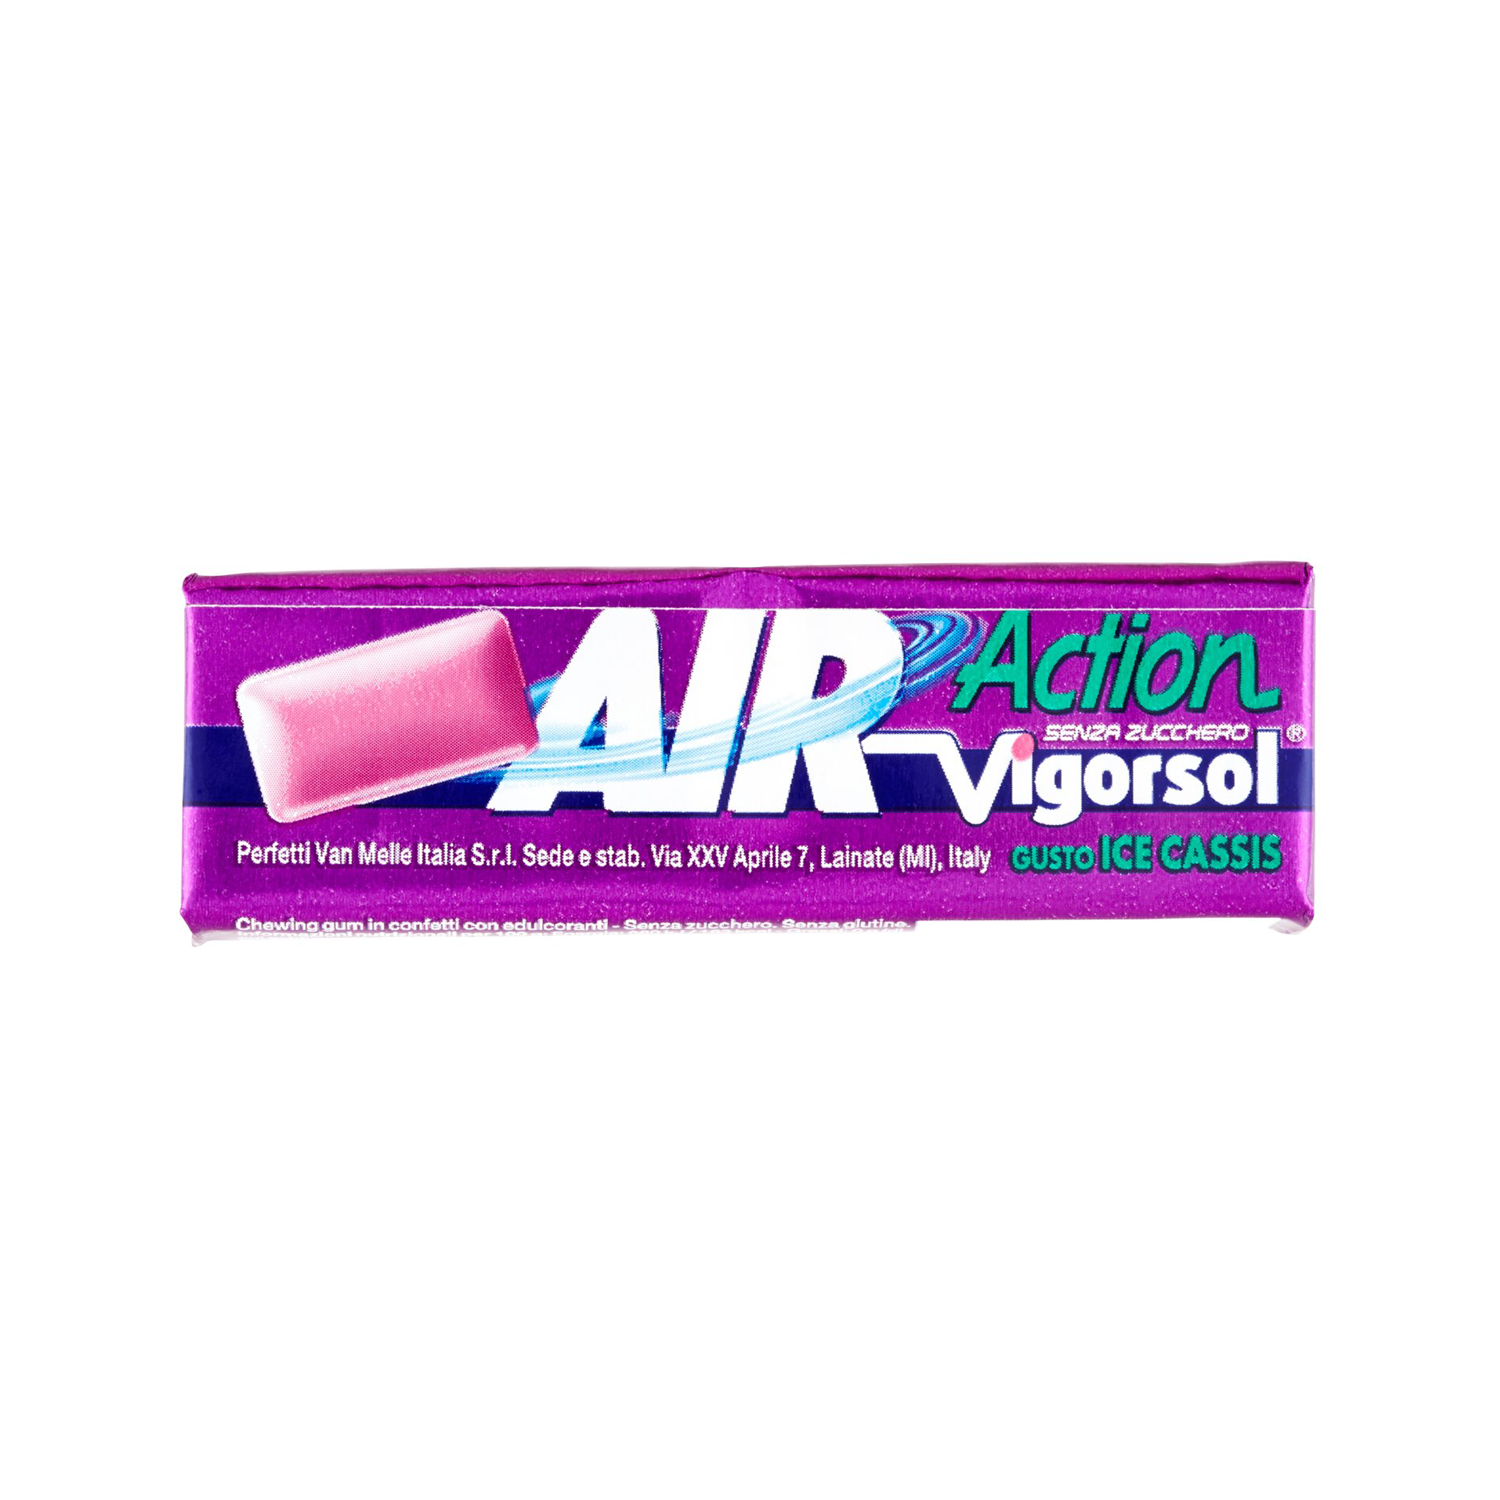 VIGORSOL Air Action Ice Cassis stick